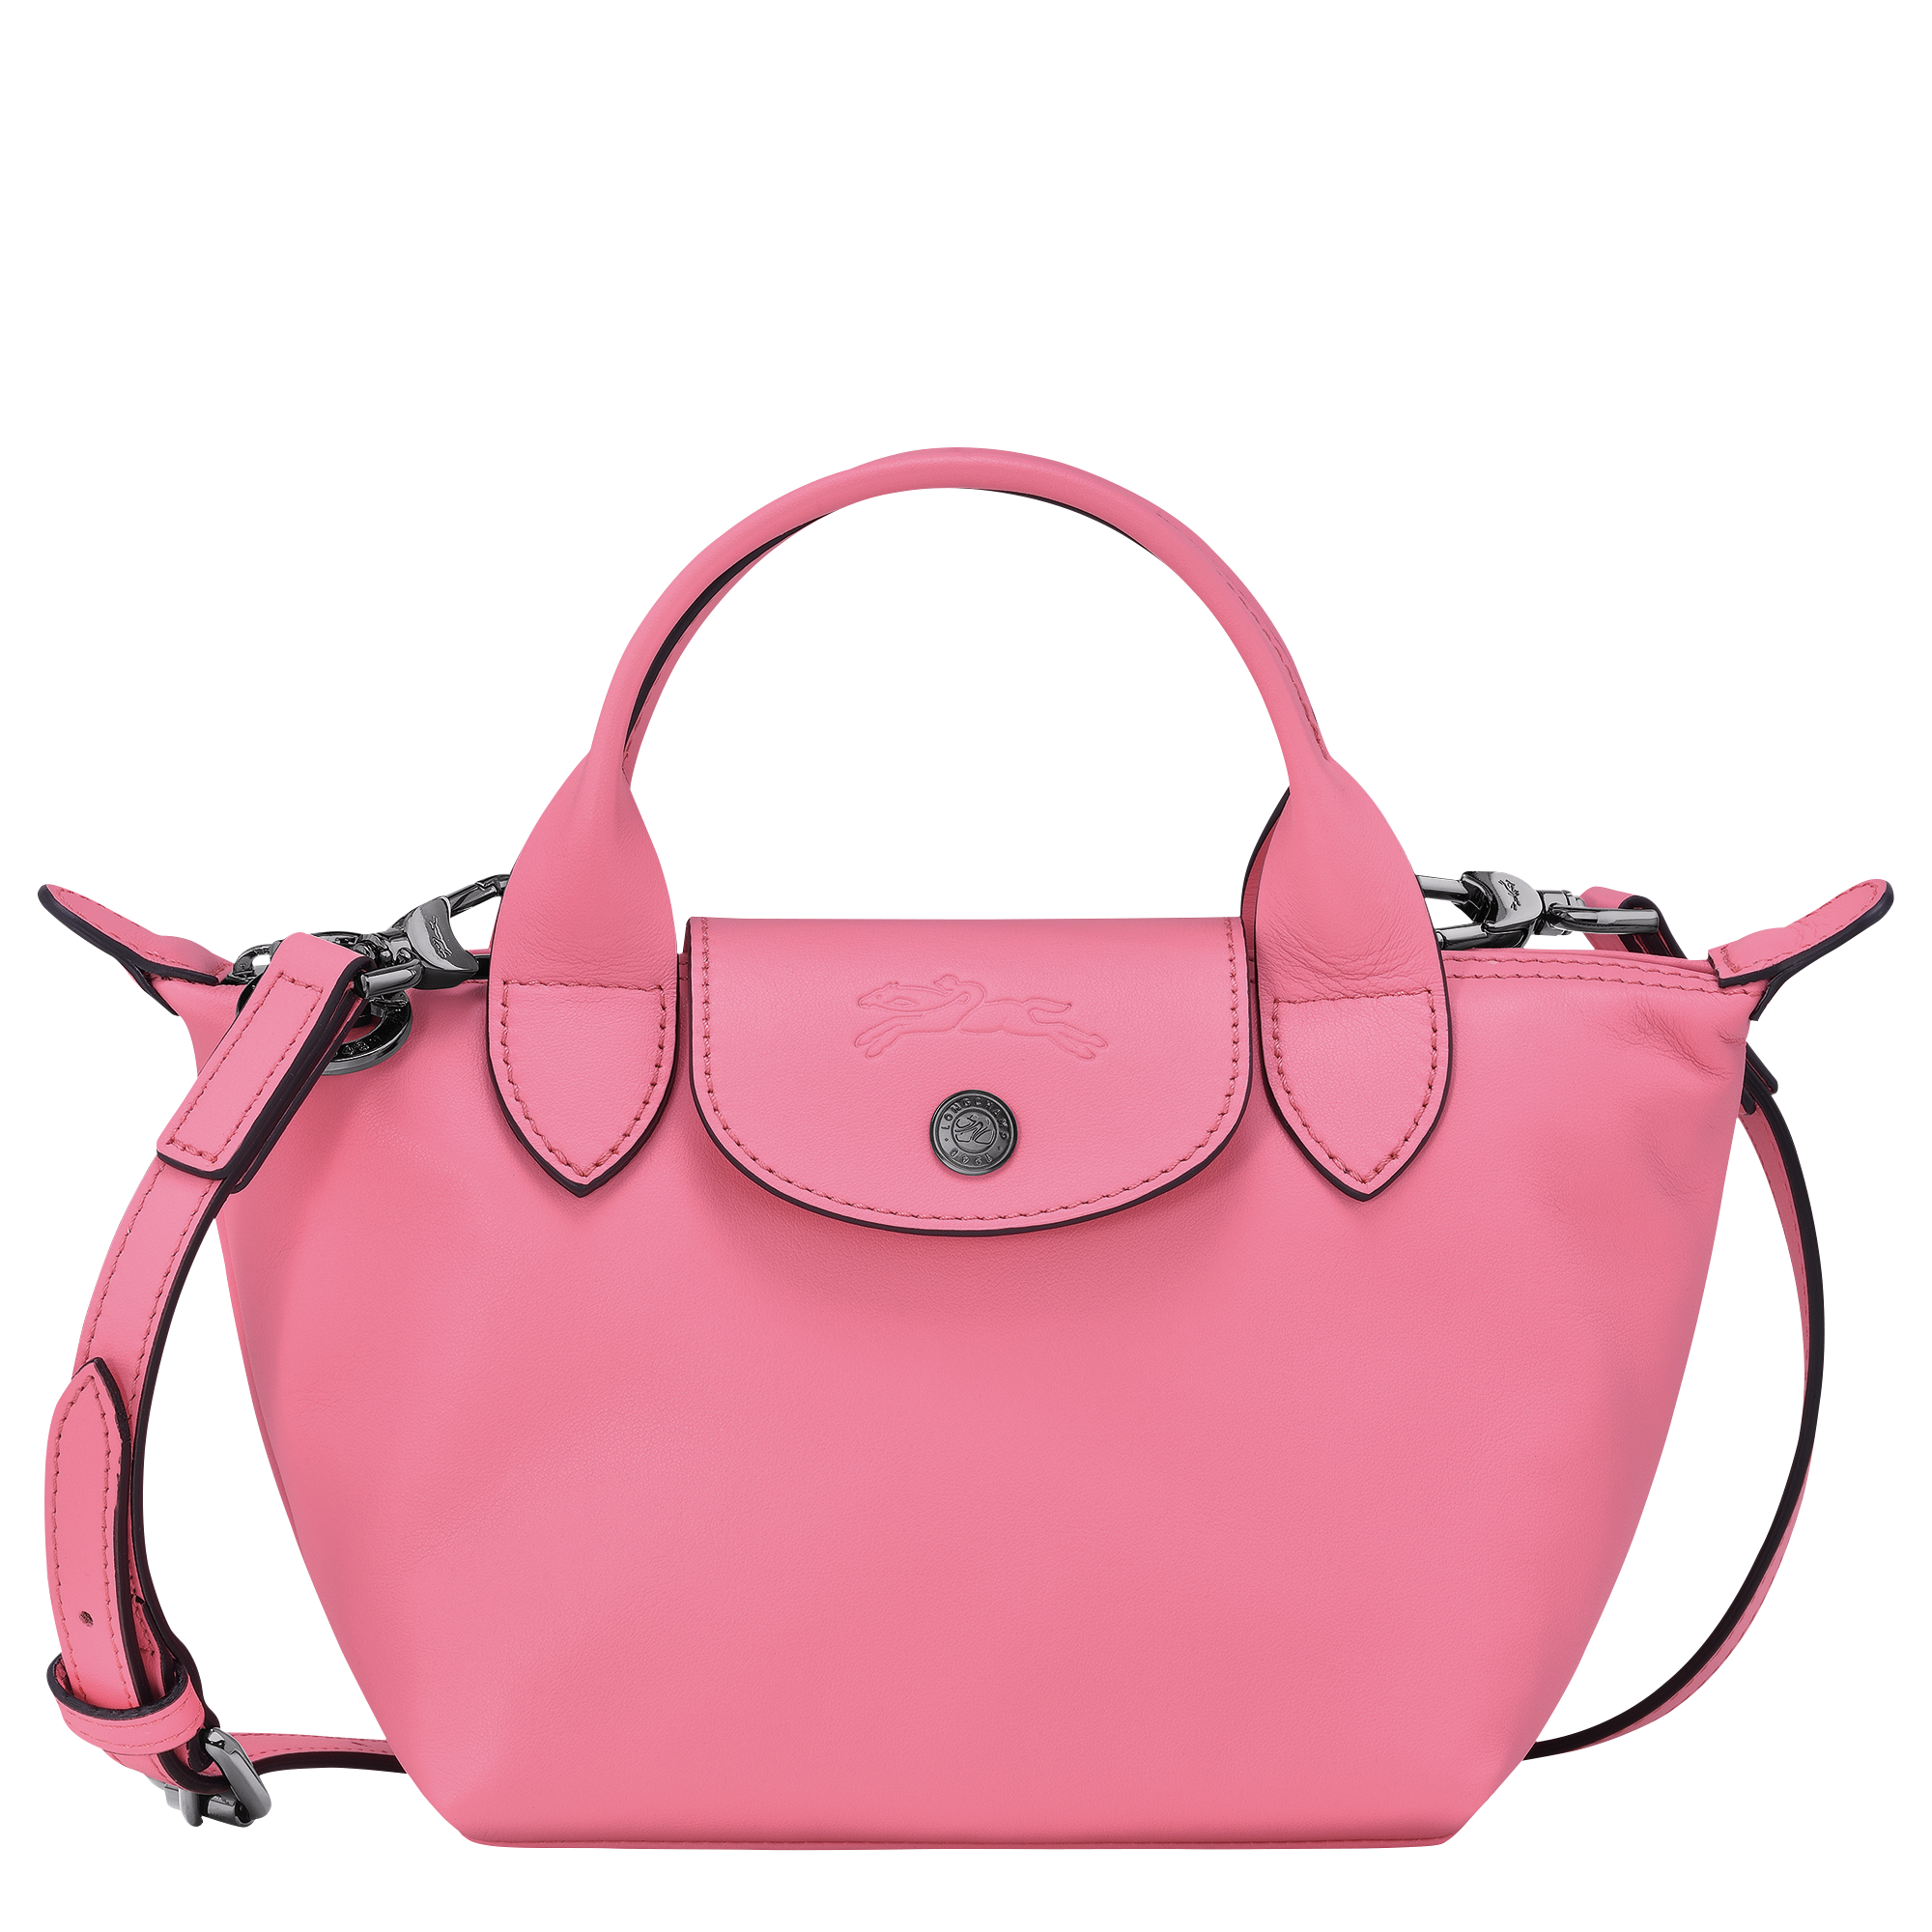 Le Pliage Xtra 手提包 XS, 粉紅色